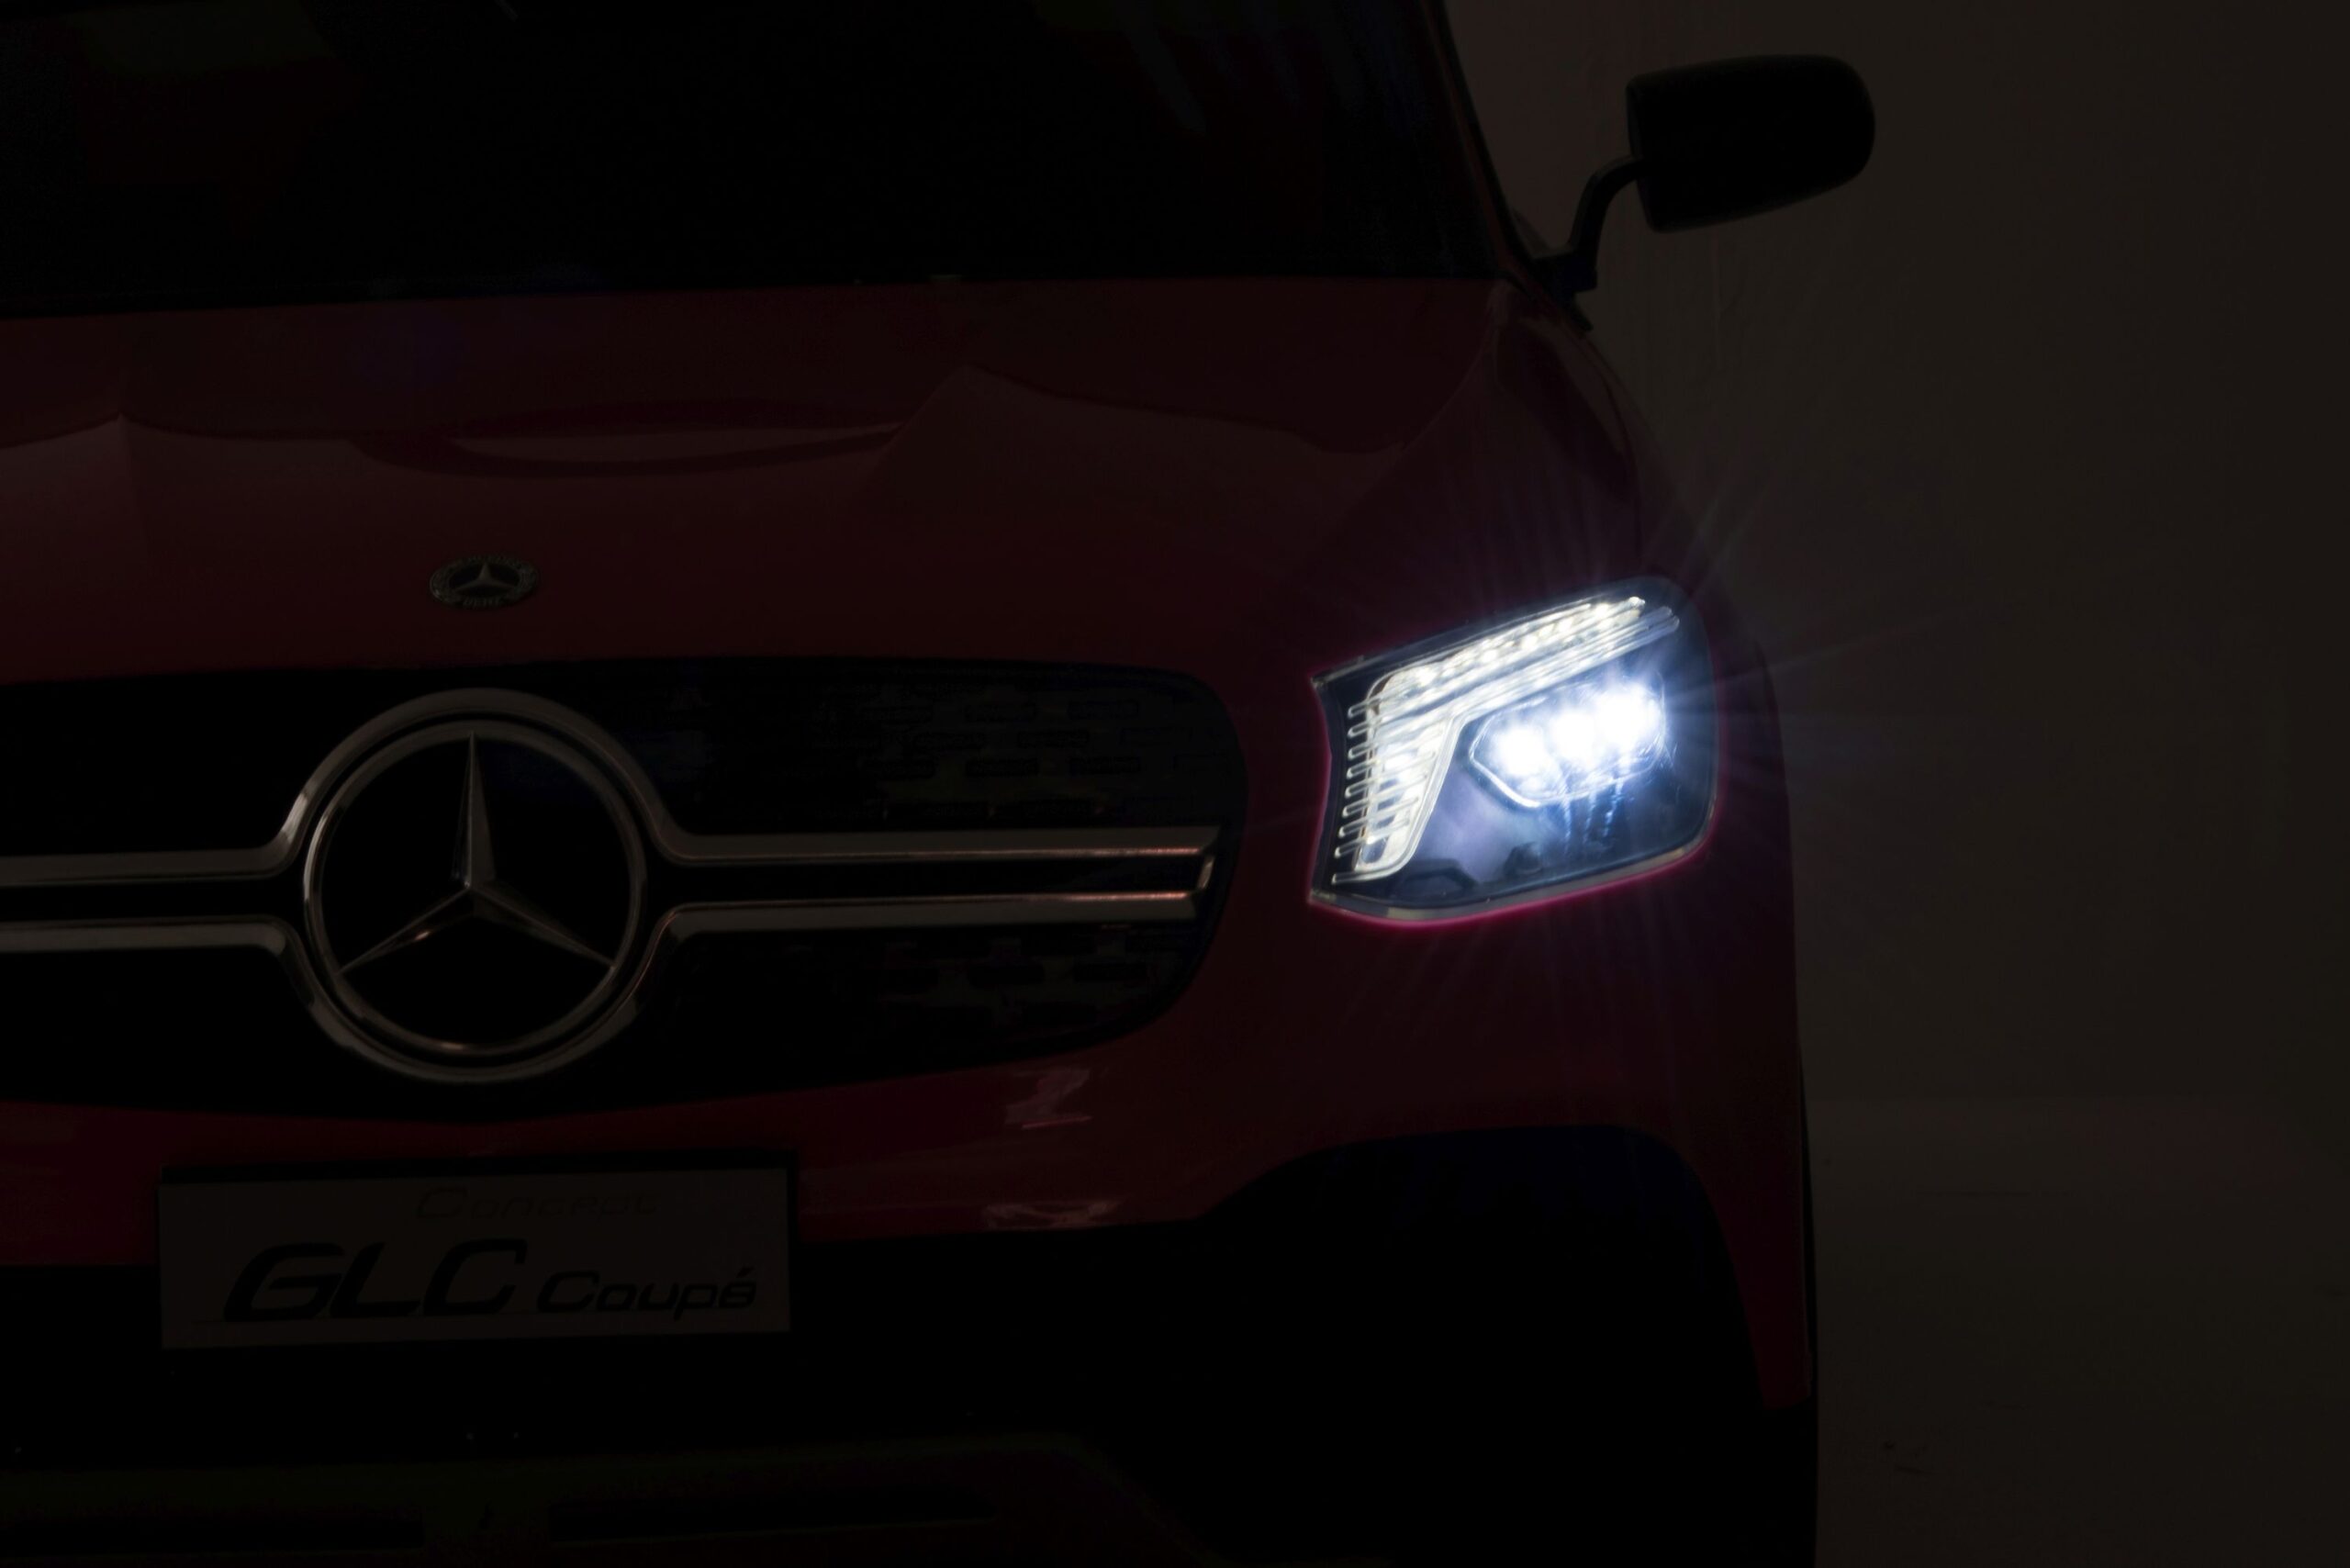 Car Led Innenbeleuchtung Canbus Für Mercedes Benz M Ml Gl Gla Glc